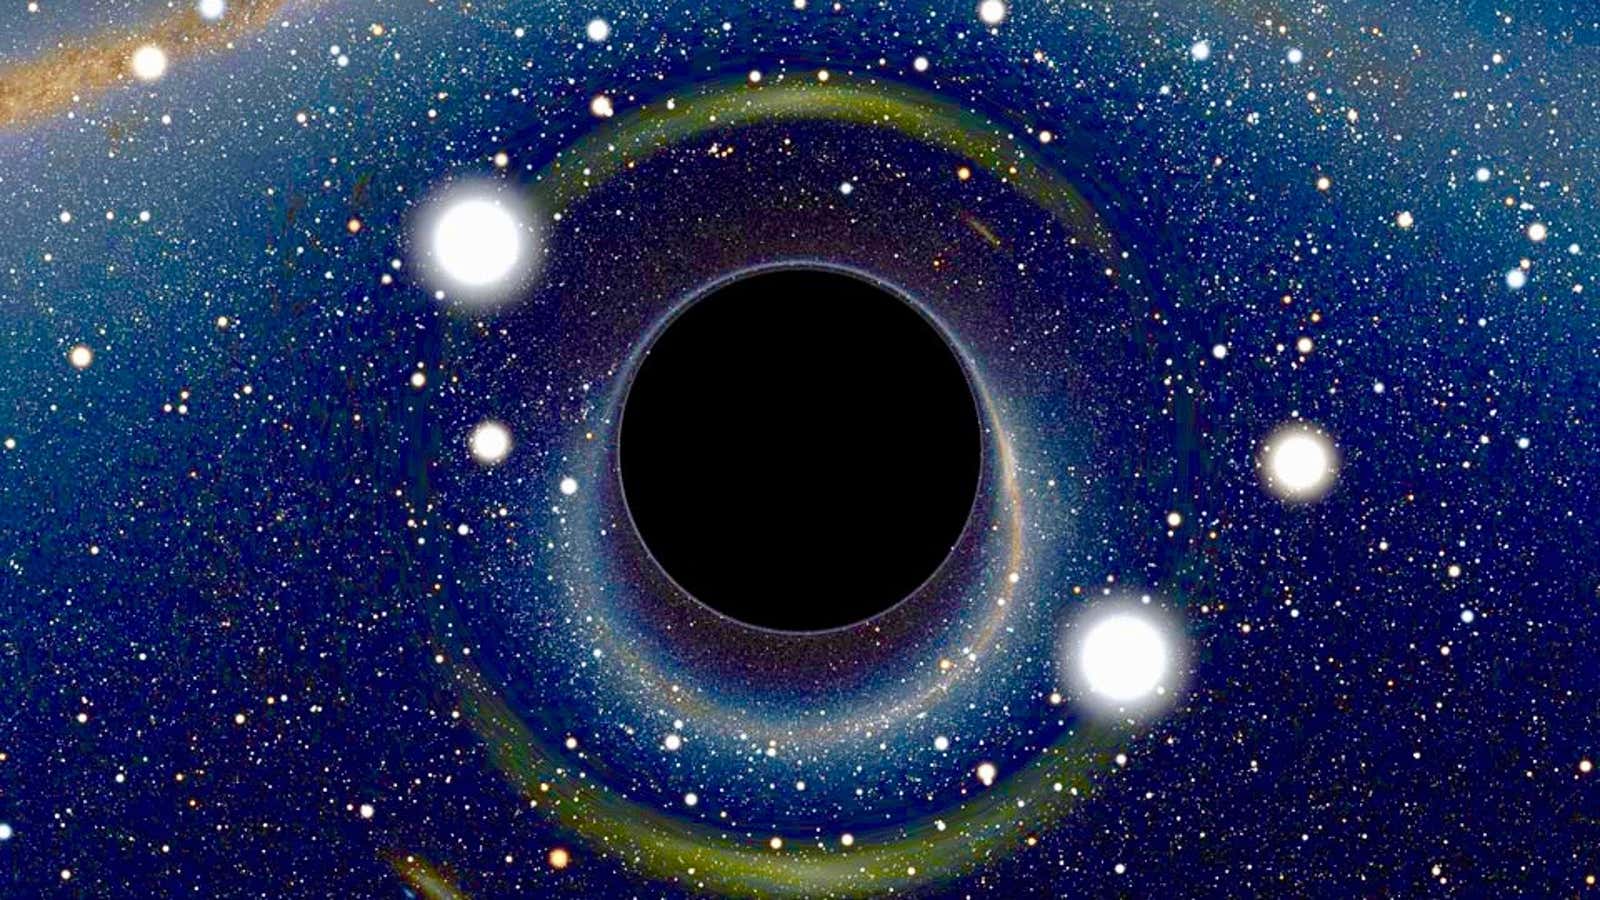 The gravitation pull of a black hole bending light.